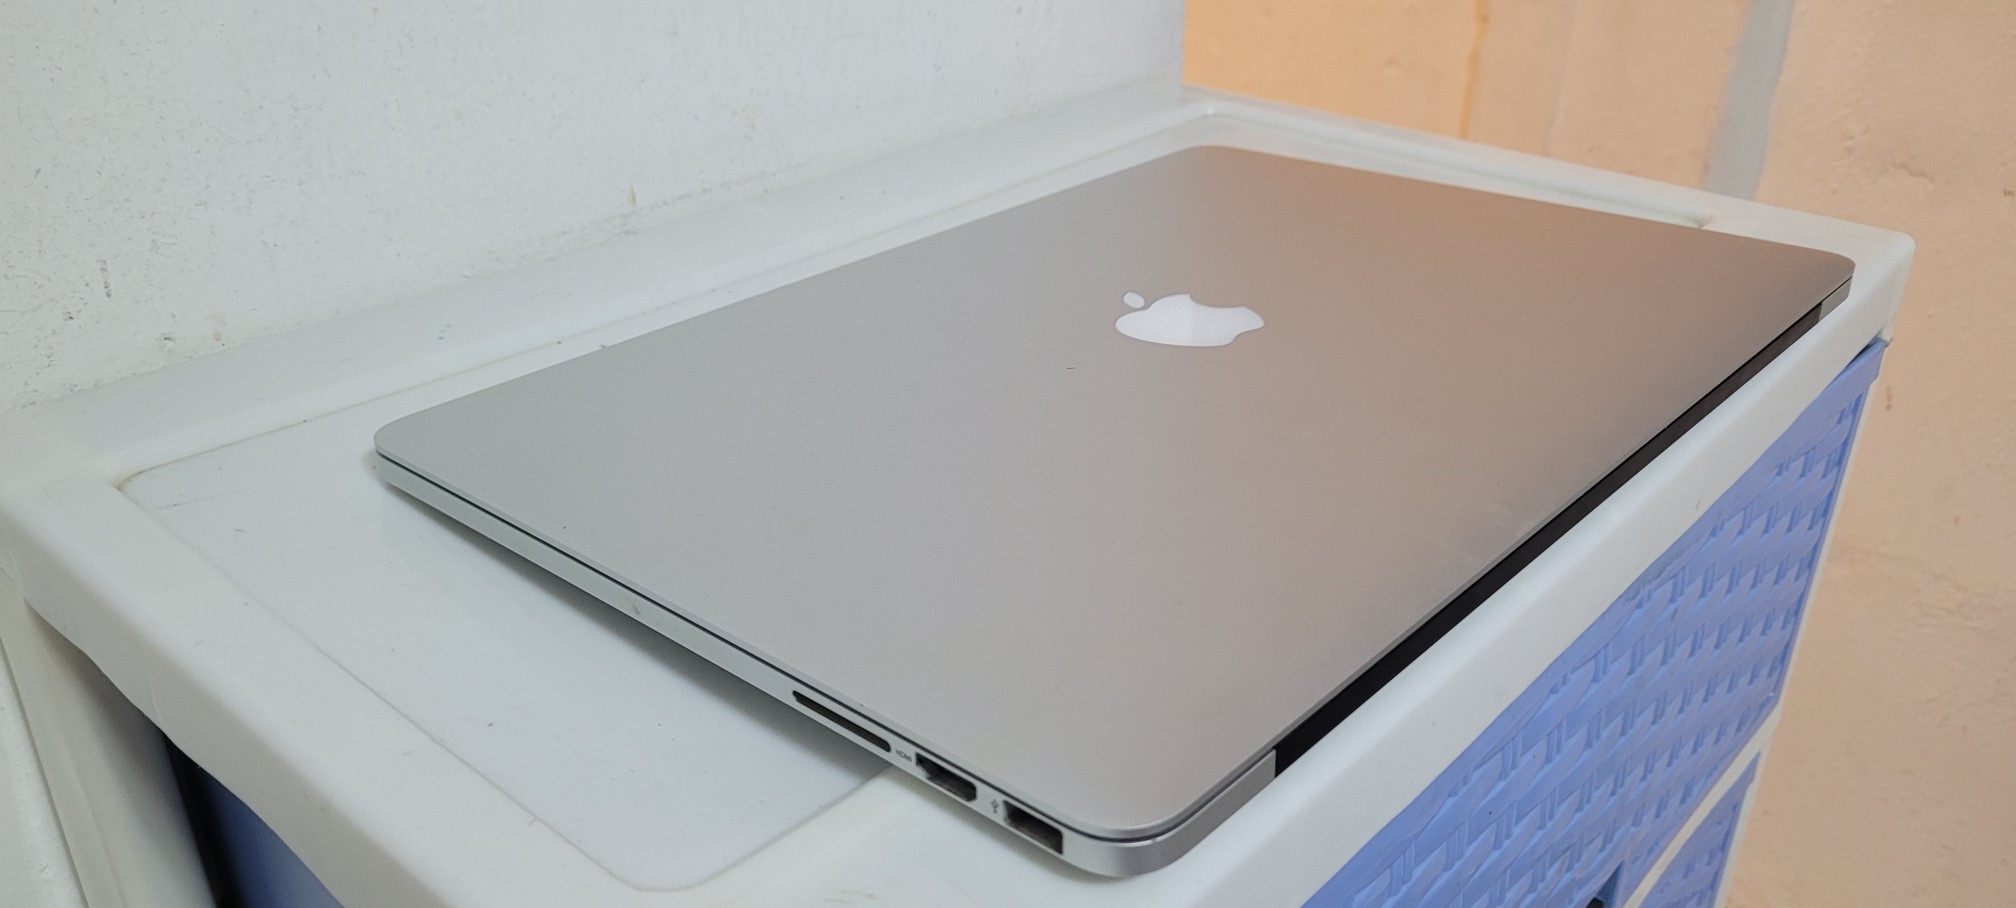 computadoras y laptops - Macbook Pro Retina 15 Pulg Core i7 Ram 16gb Disco SSD 512GB 2015 EN CAJA 2